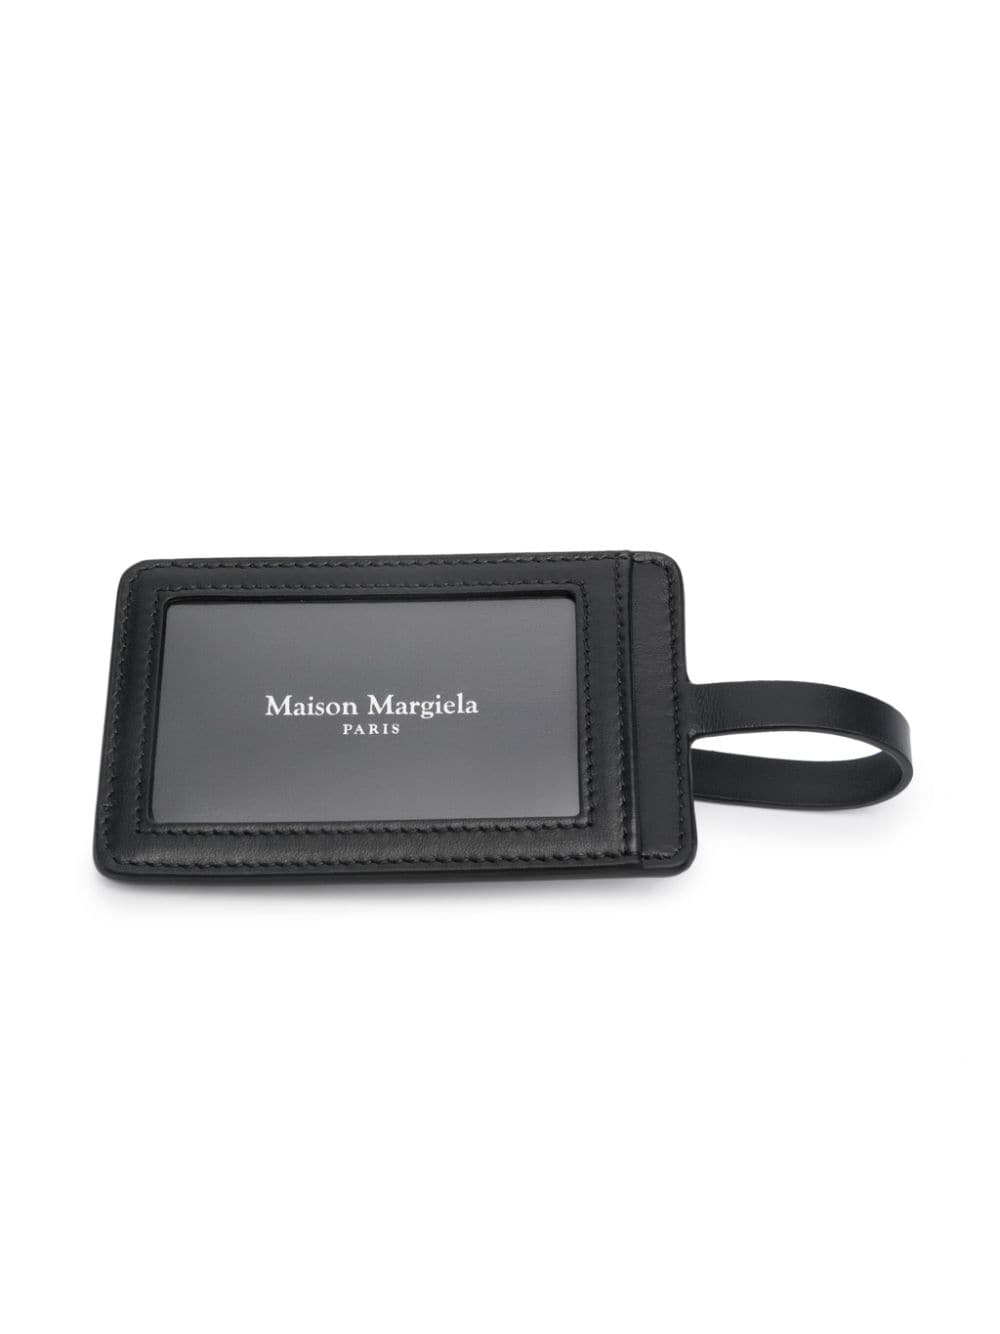 Maison Margiela four-stitch leather luggage tag - Black von Maison Margiela